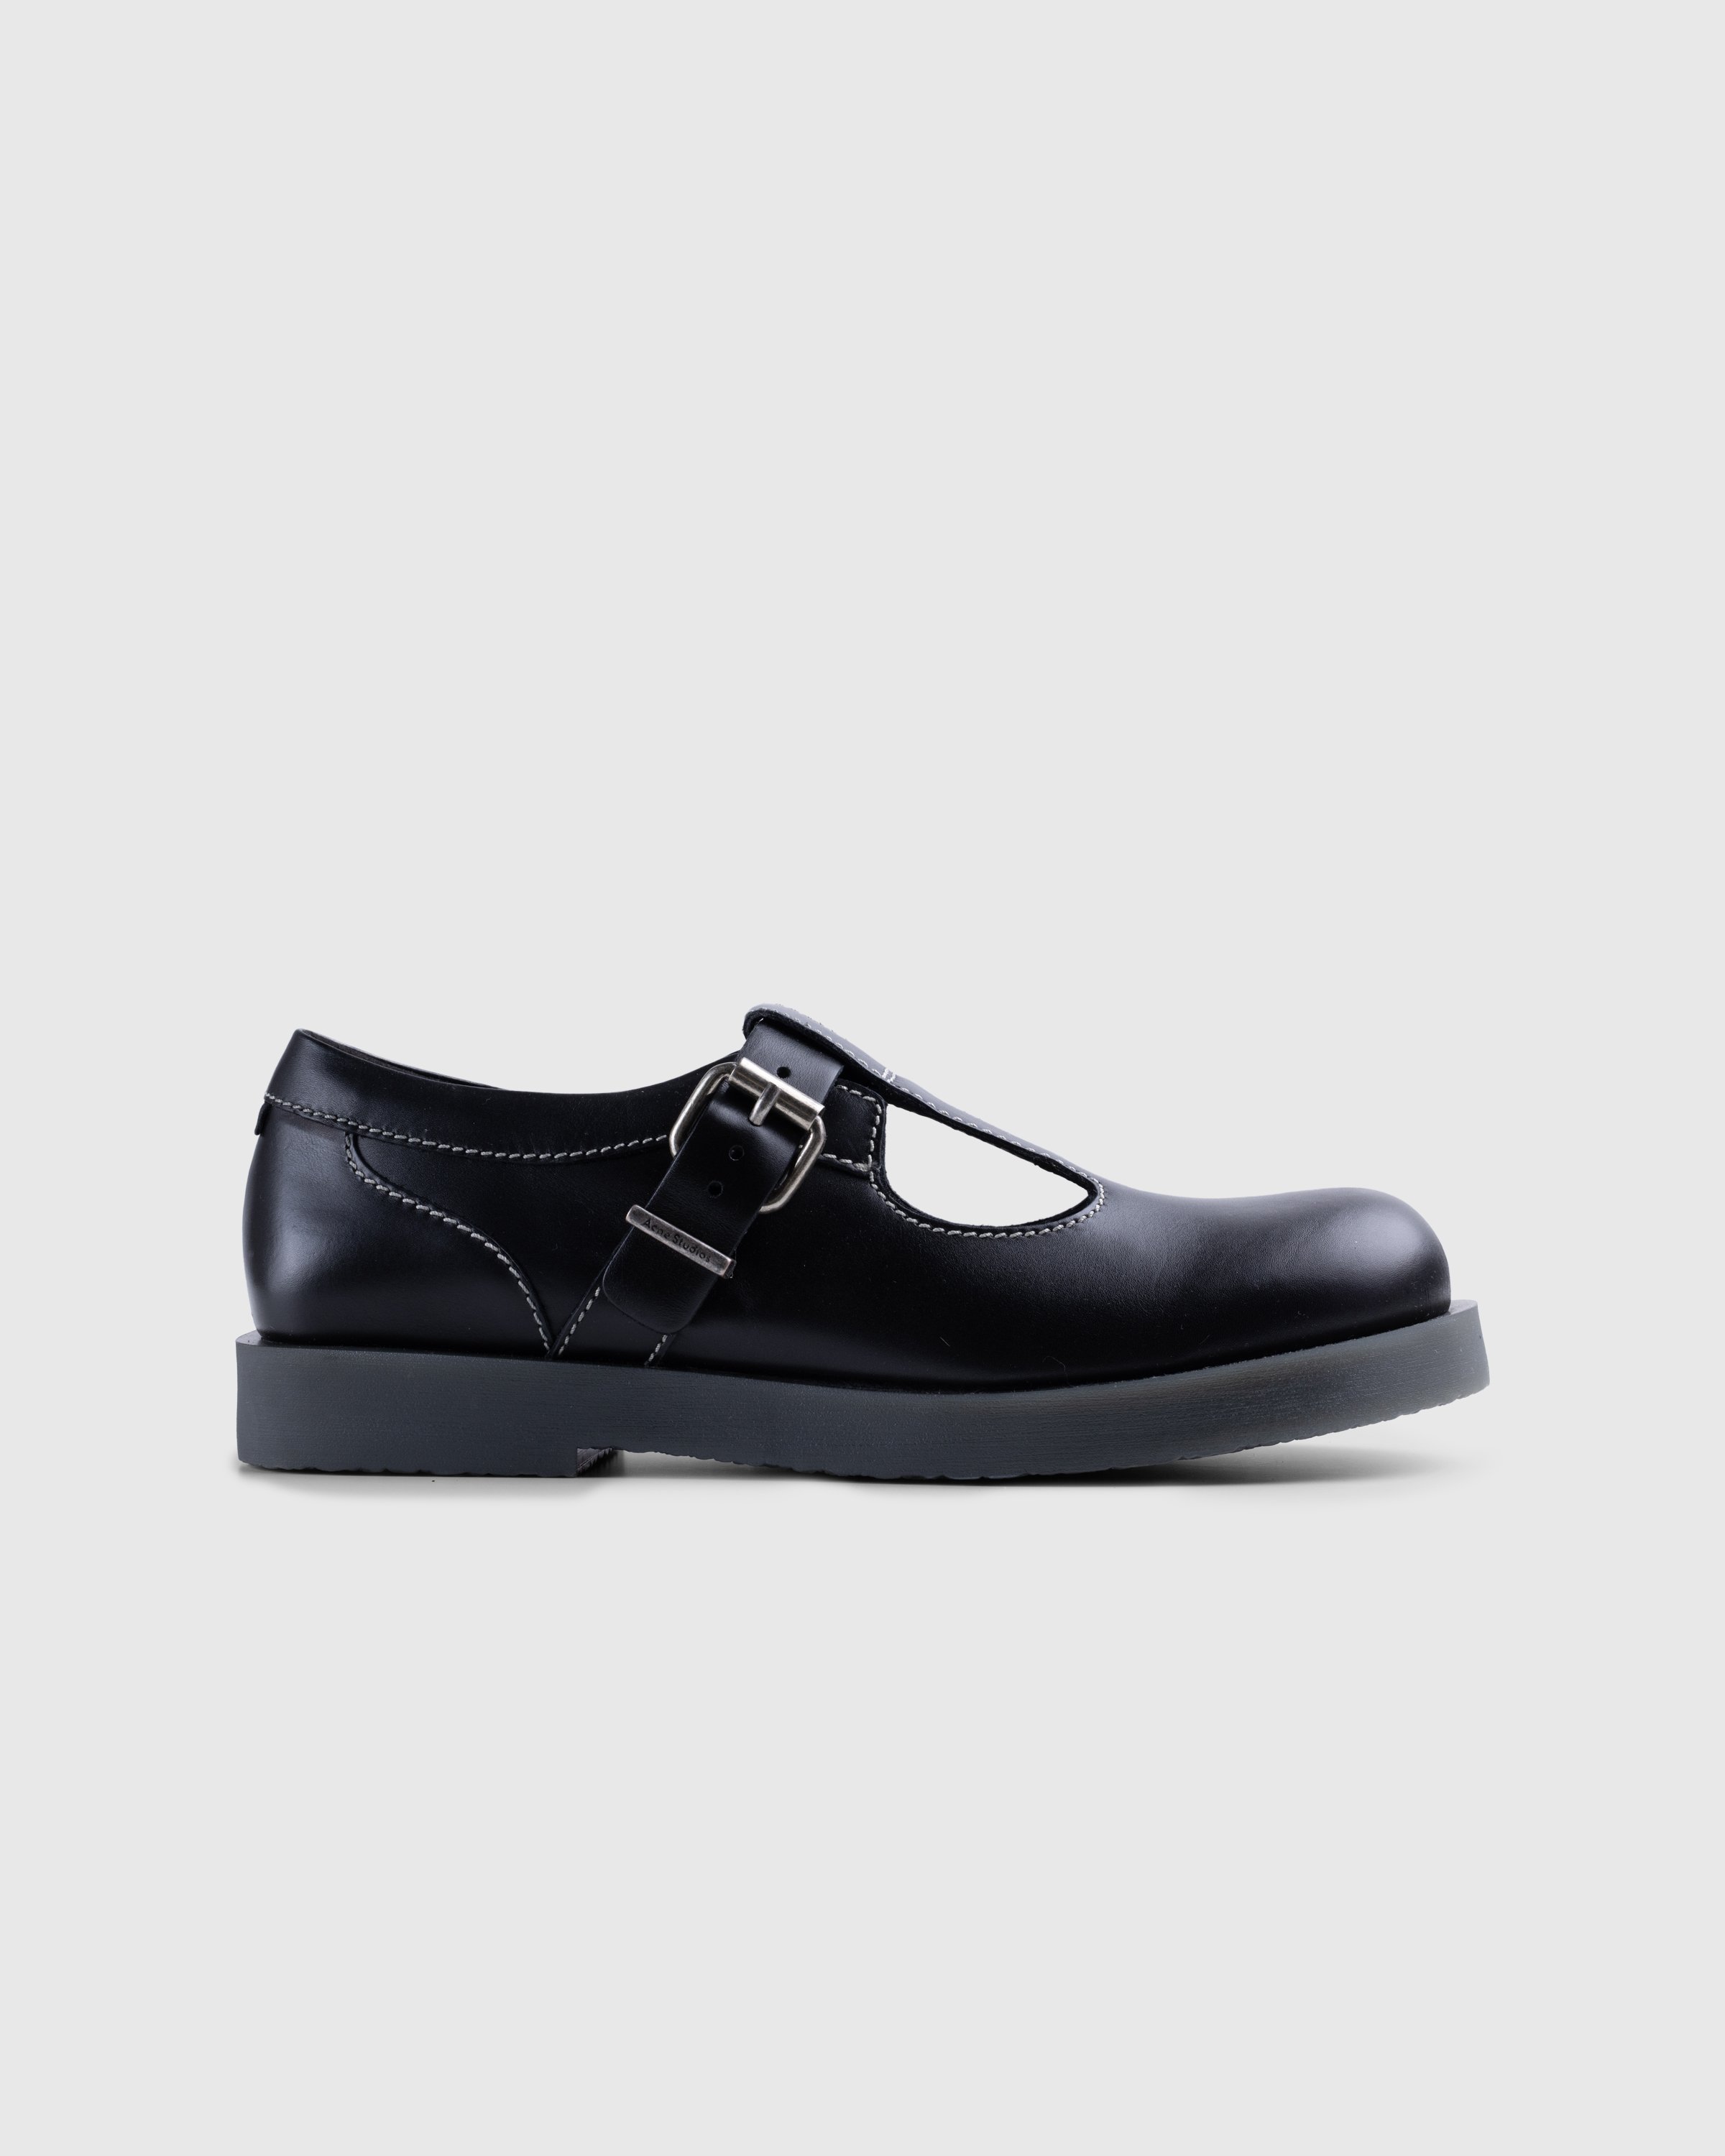 Acne Studios - Berylab Leather Buckle Shoes Black - Footwear - Black - Image 1